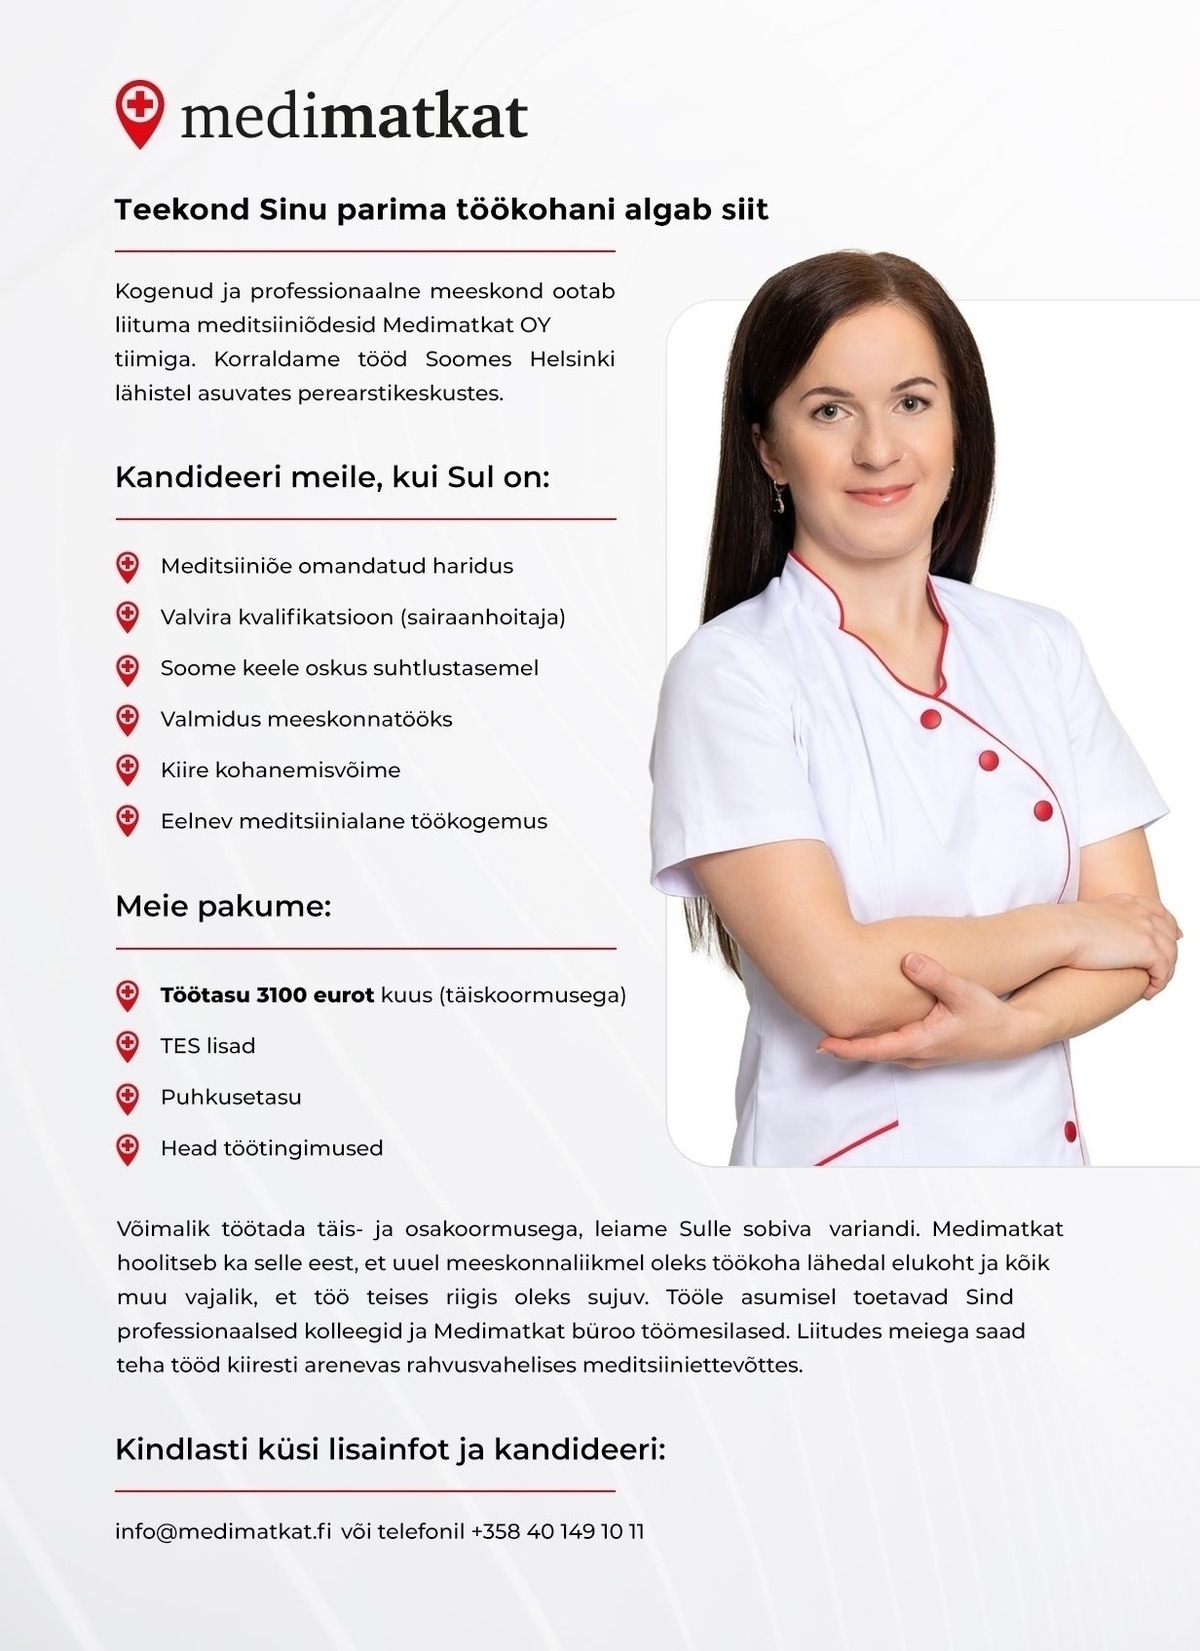 CVKeskus.ee klient Meditsiiniõde Soome - Sairaanhoitaja